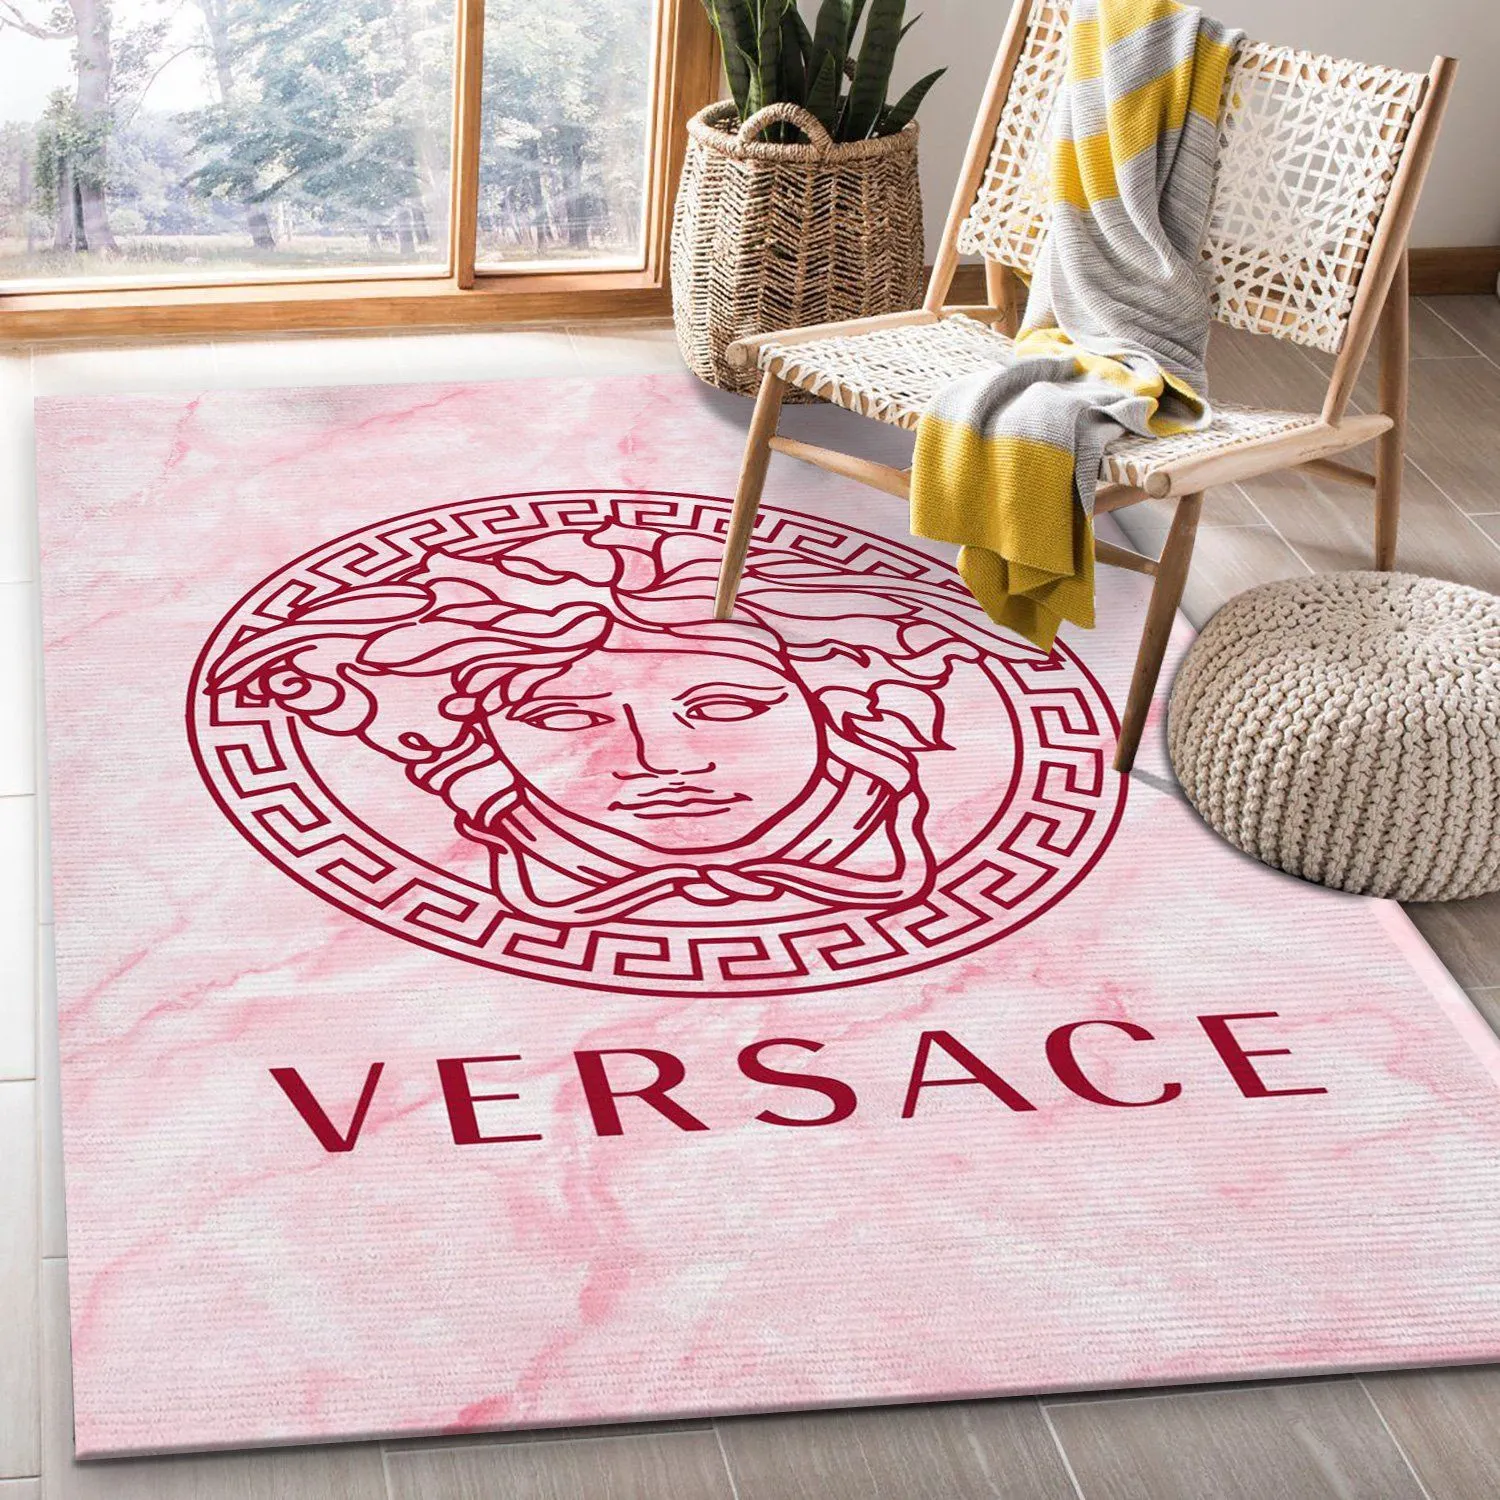 Versace s Rectangle Rug Luxury Fashion Brand Door Mat Area Carpet Home Decor